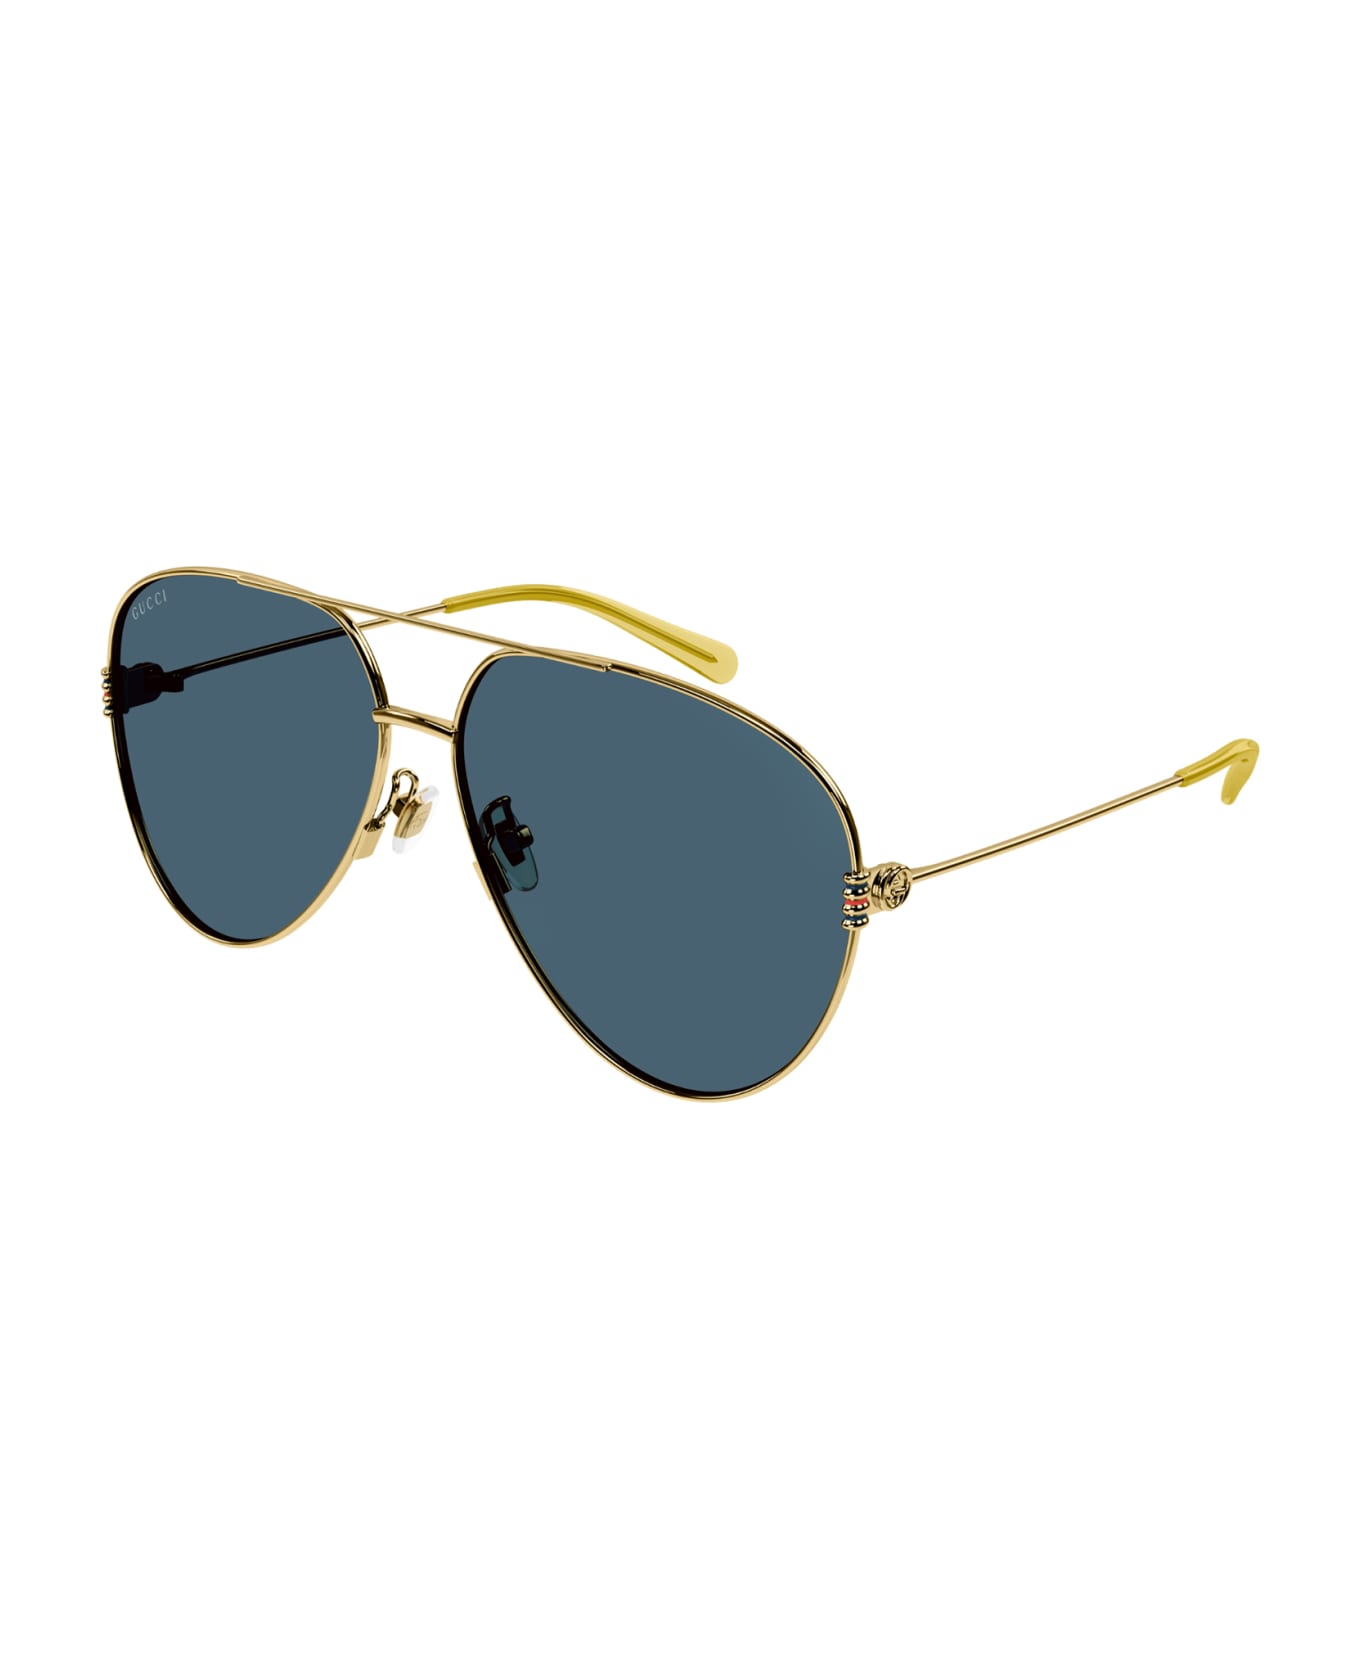 Gucci Eyewear Gg1280s Sunglasses - 003 gold gold blue